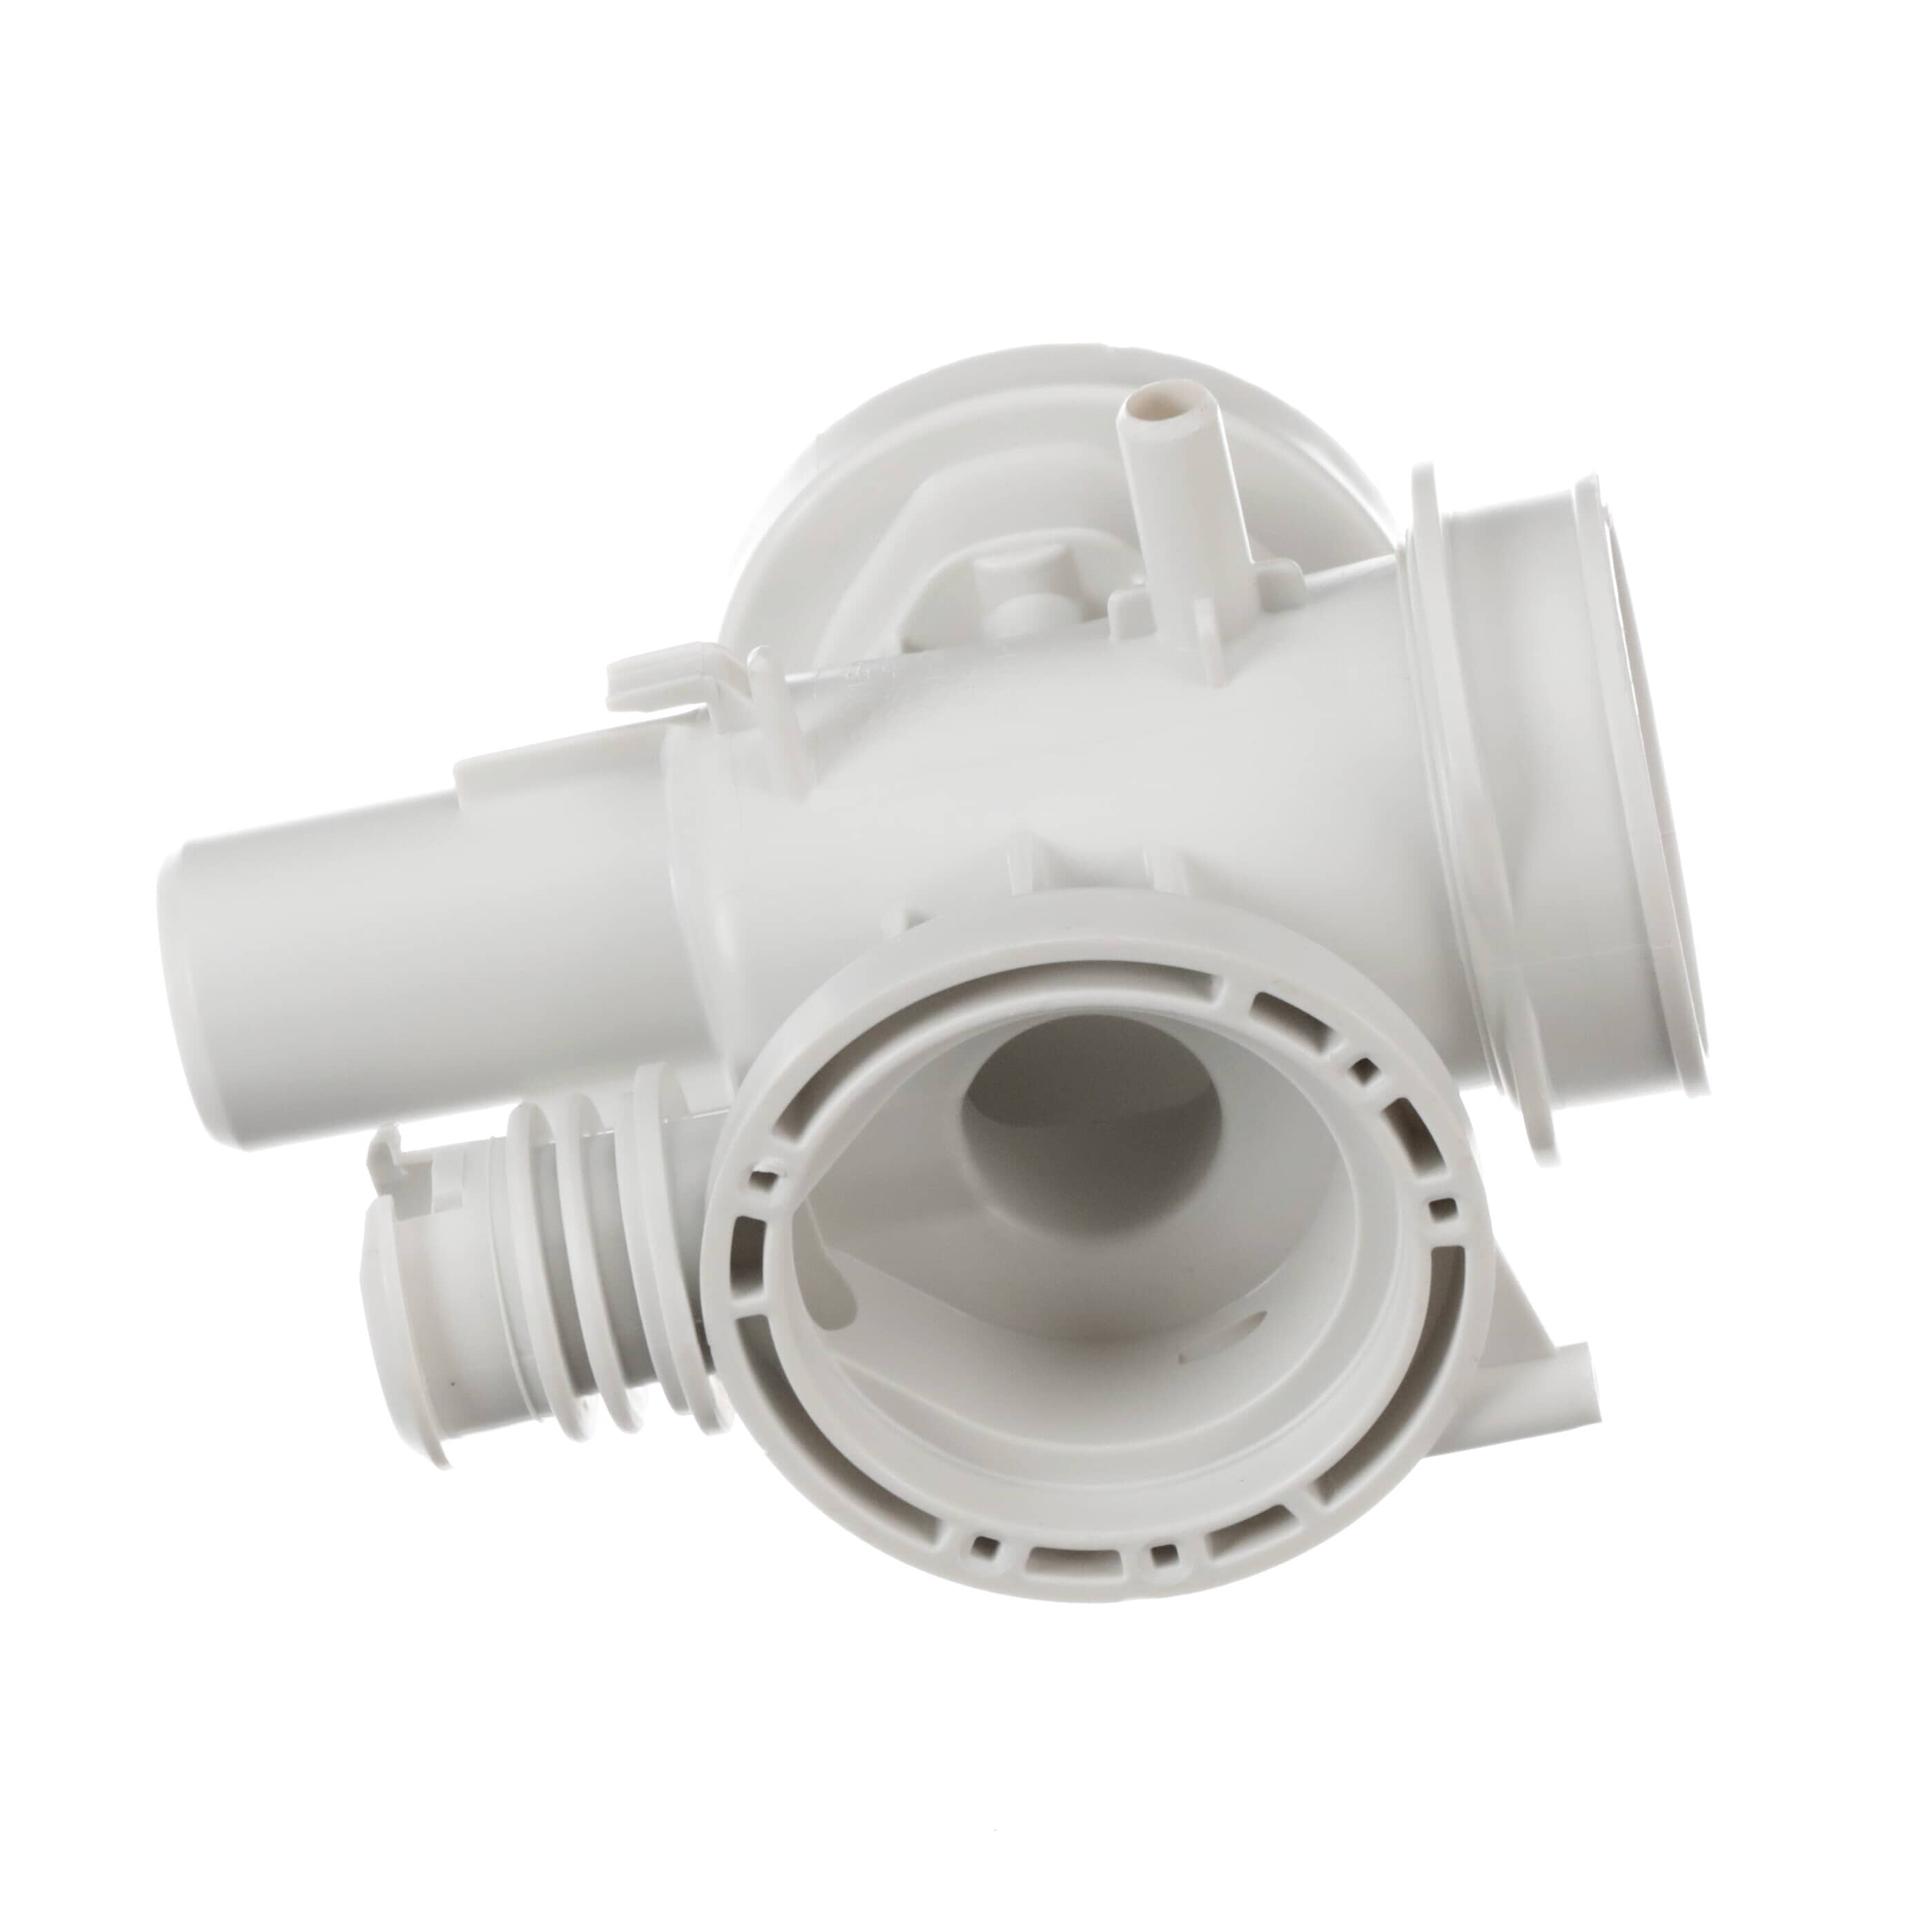 Samsung DC61-02017E Washer Drain Pump Filter